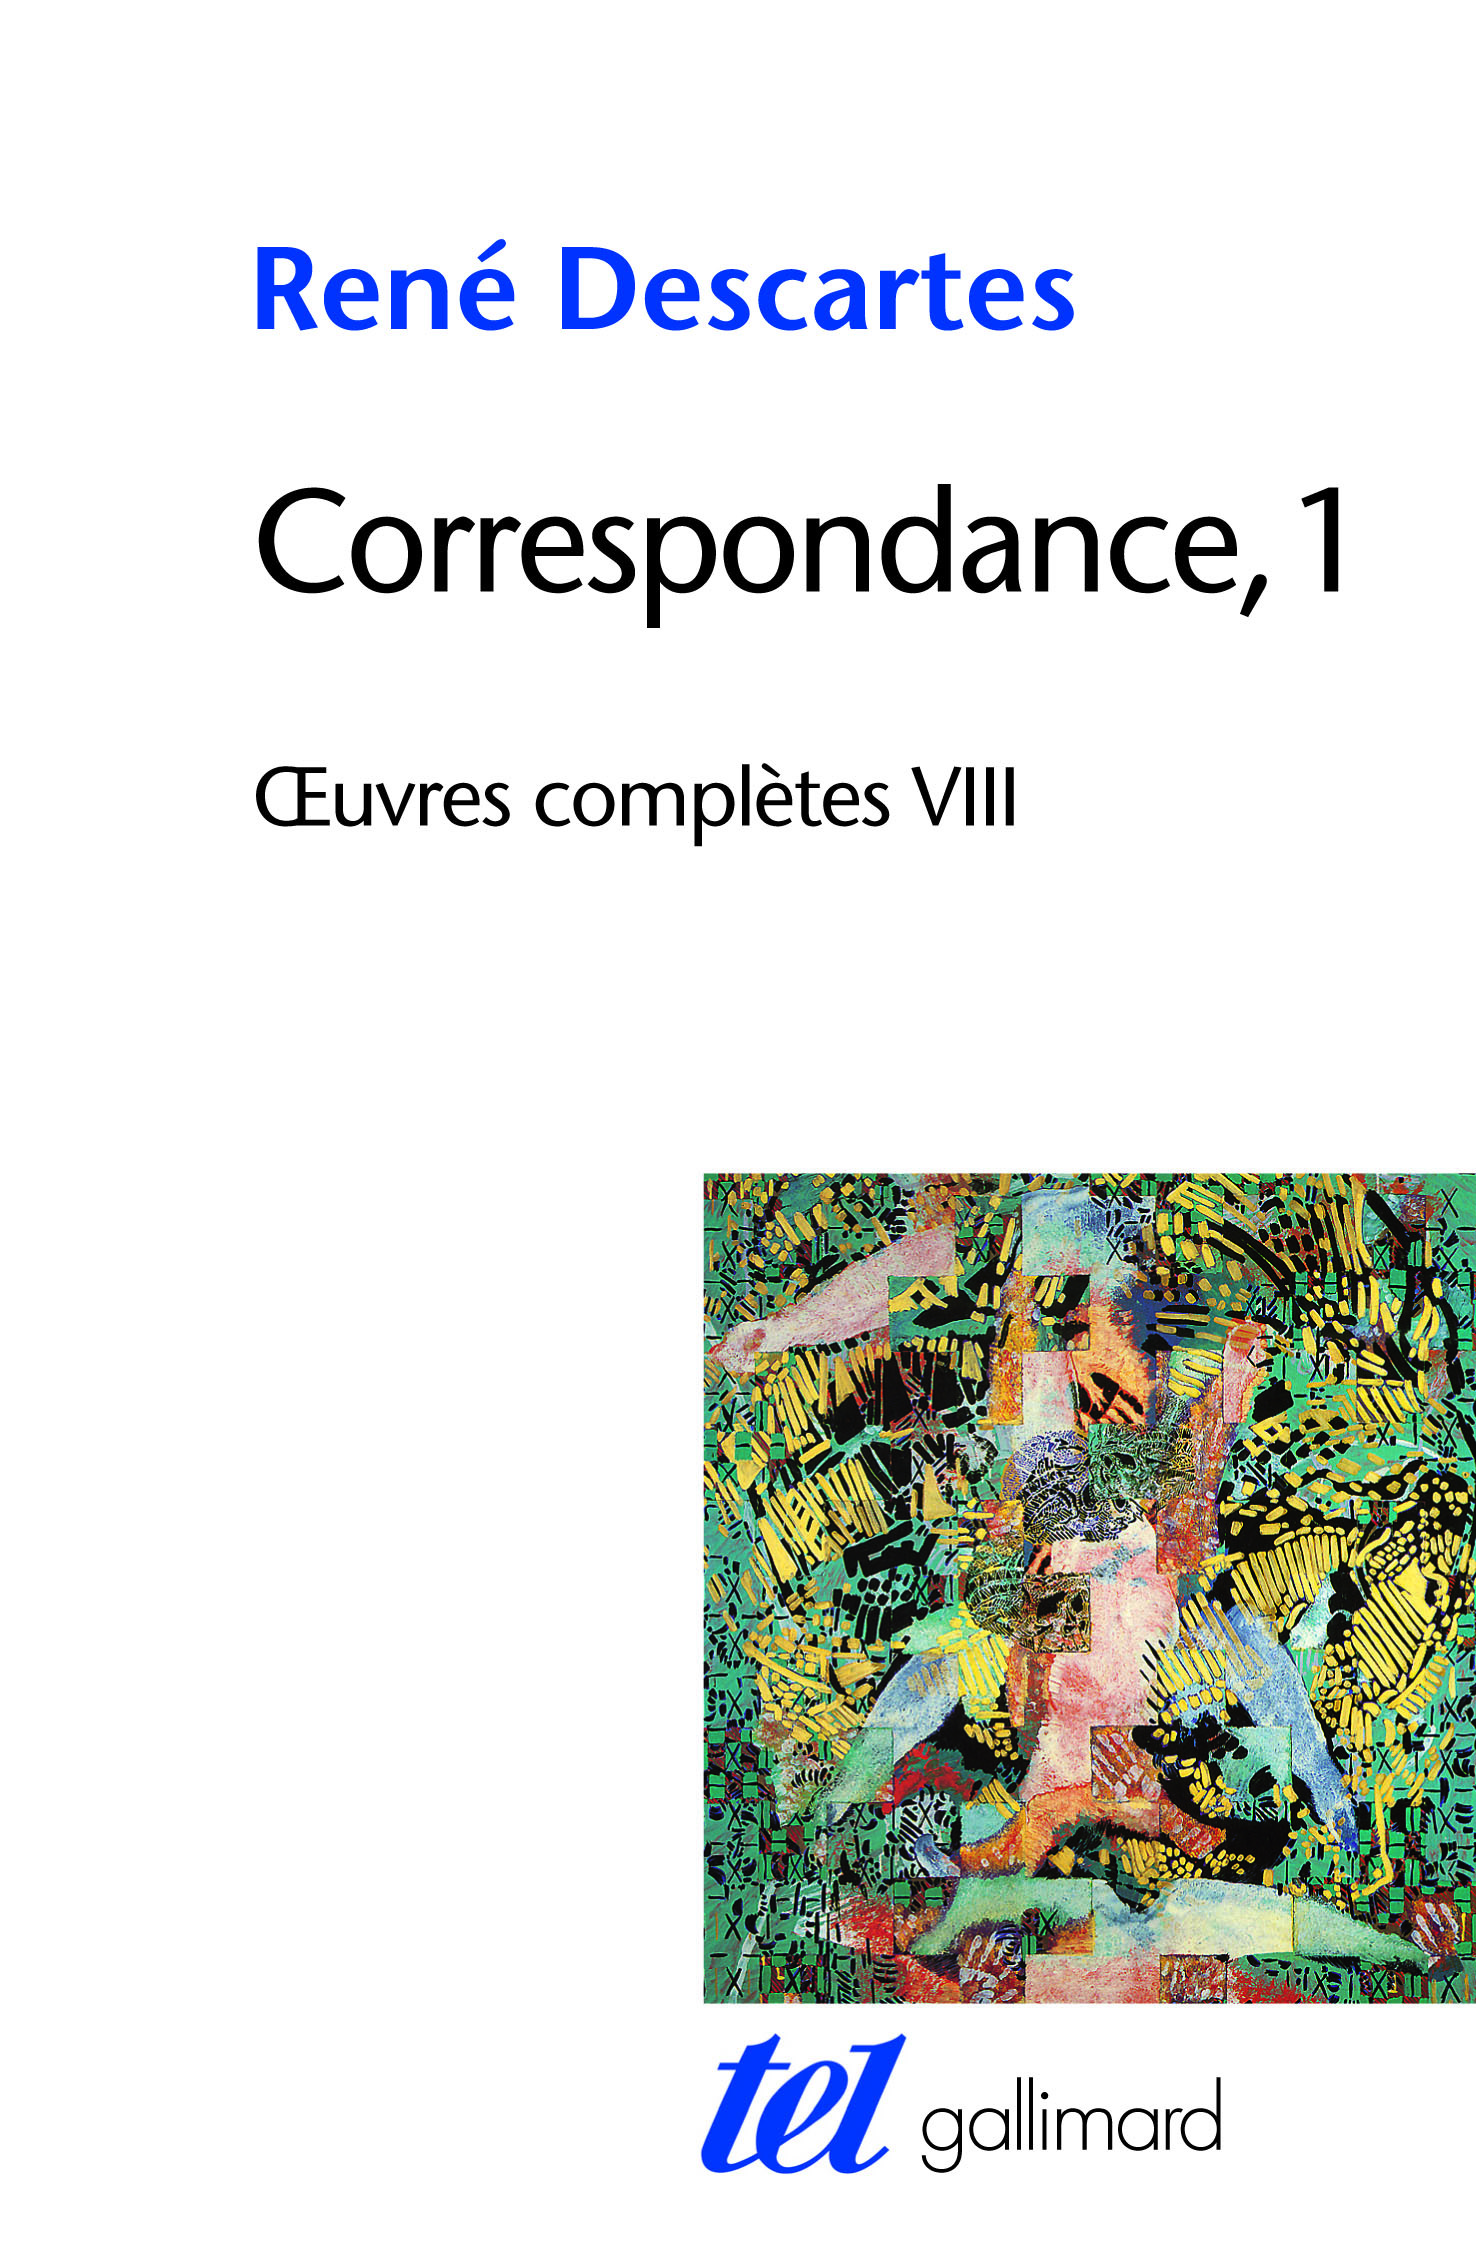 Correspondance, 1 (9782070138548-front-cover)